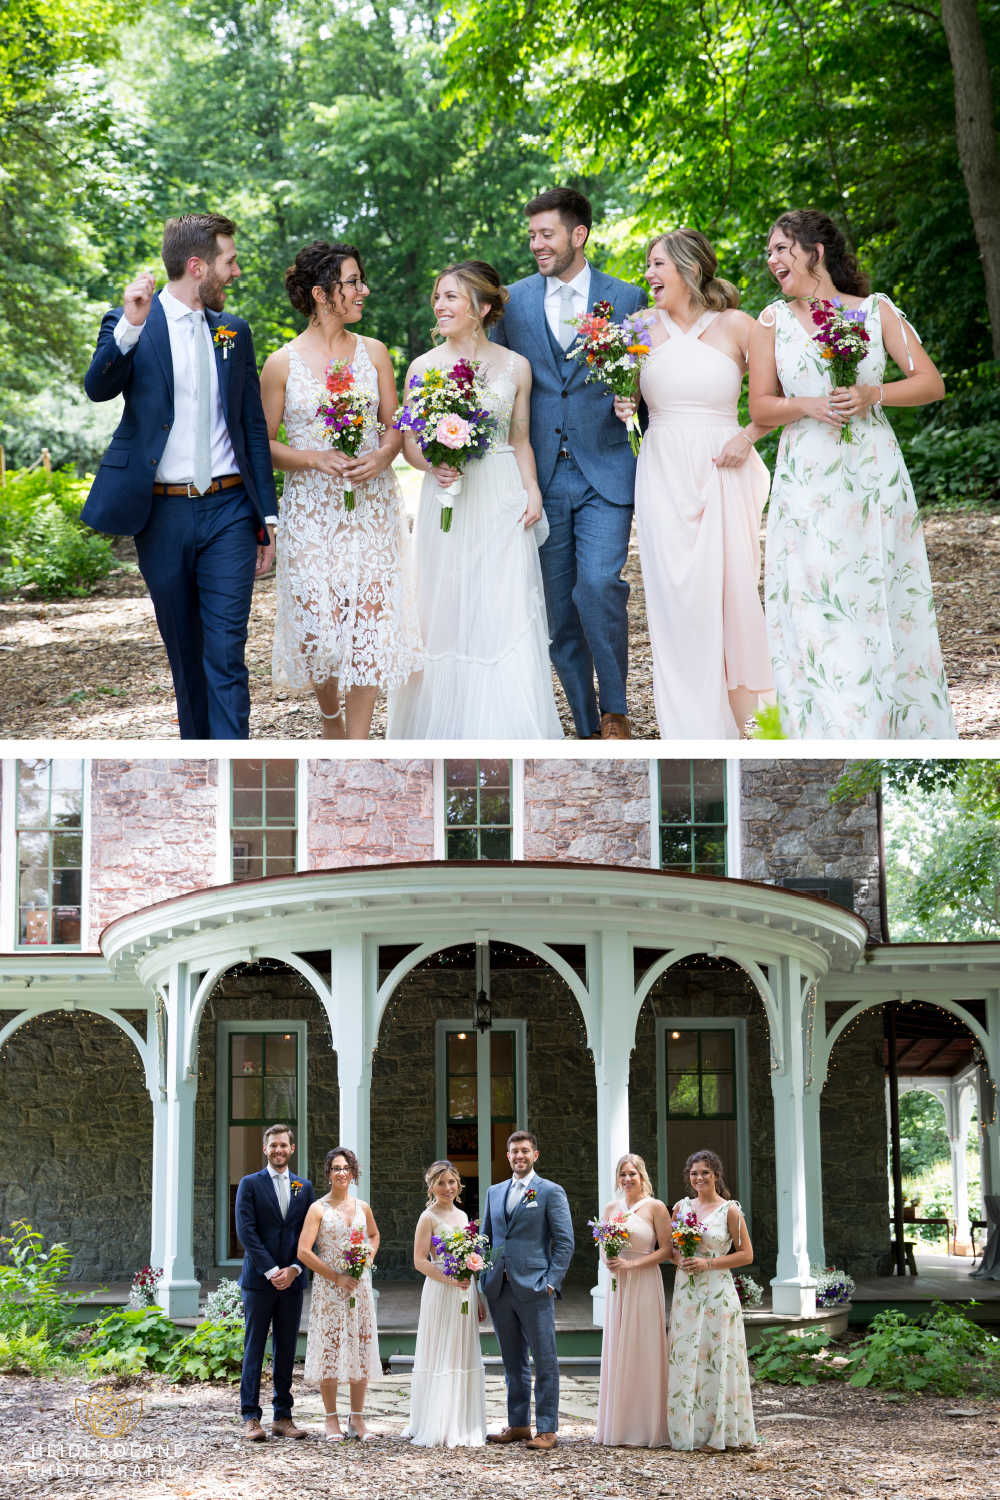 Cope House wedding photos in Philadelphia Portico Awbury Arboretum